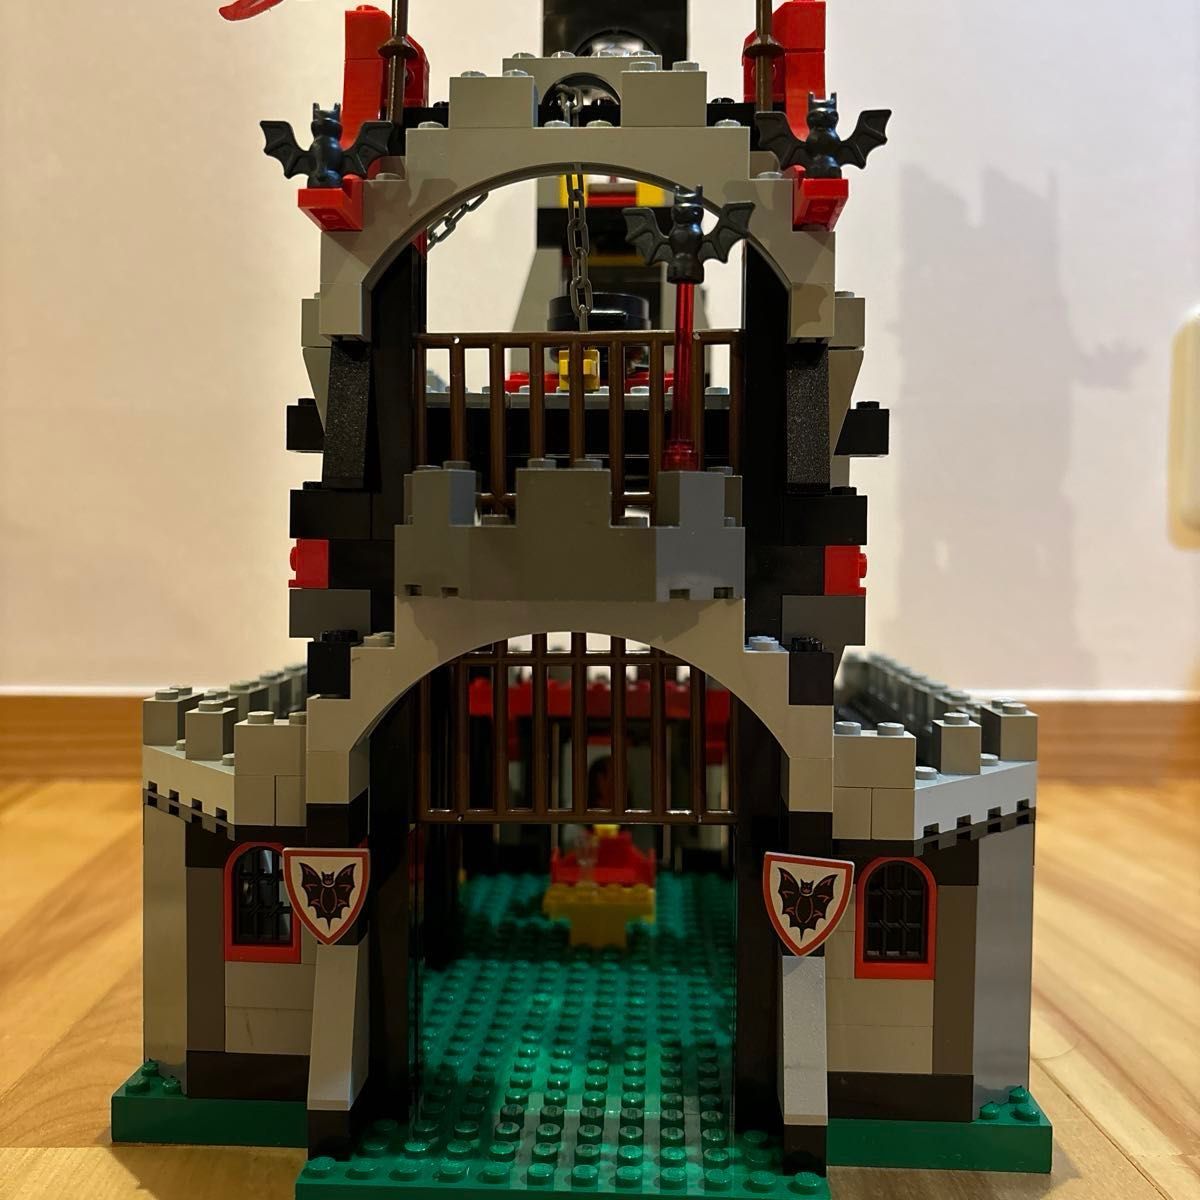 LEGO レゴ お城シリーズ 6097 コウモリ男爵の城 1997年 レア オールドレゴ ※ミニフィグ無し